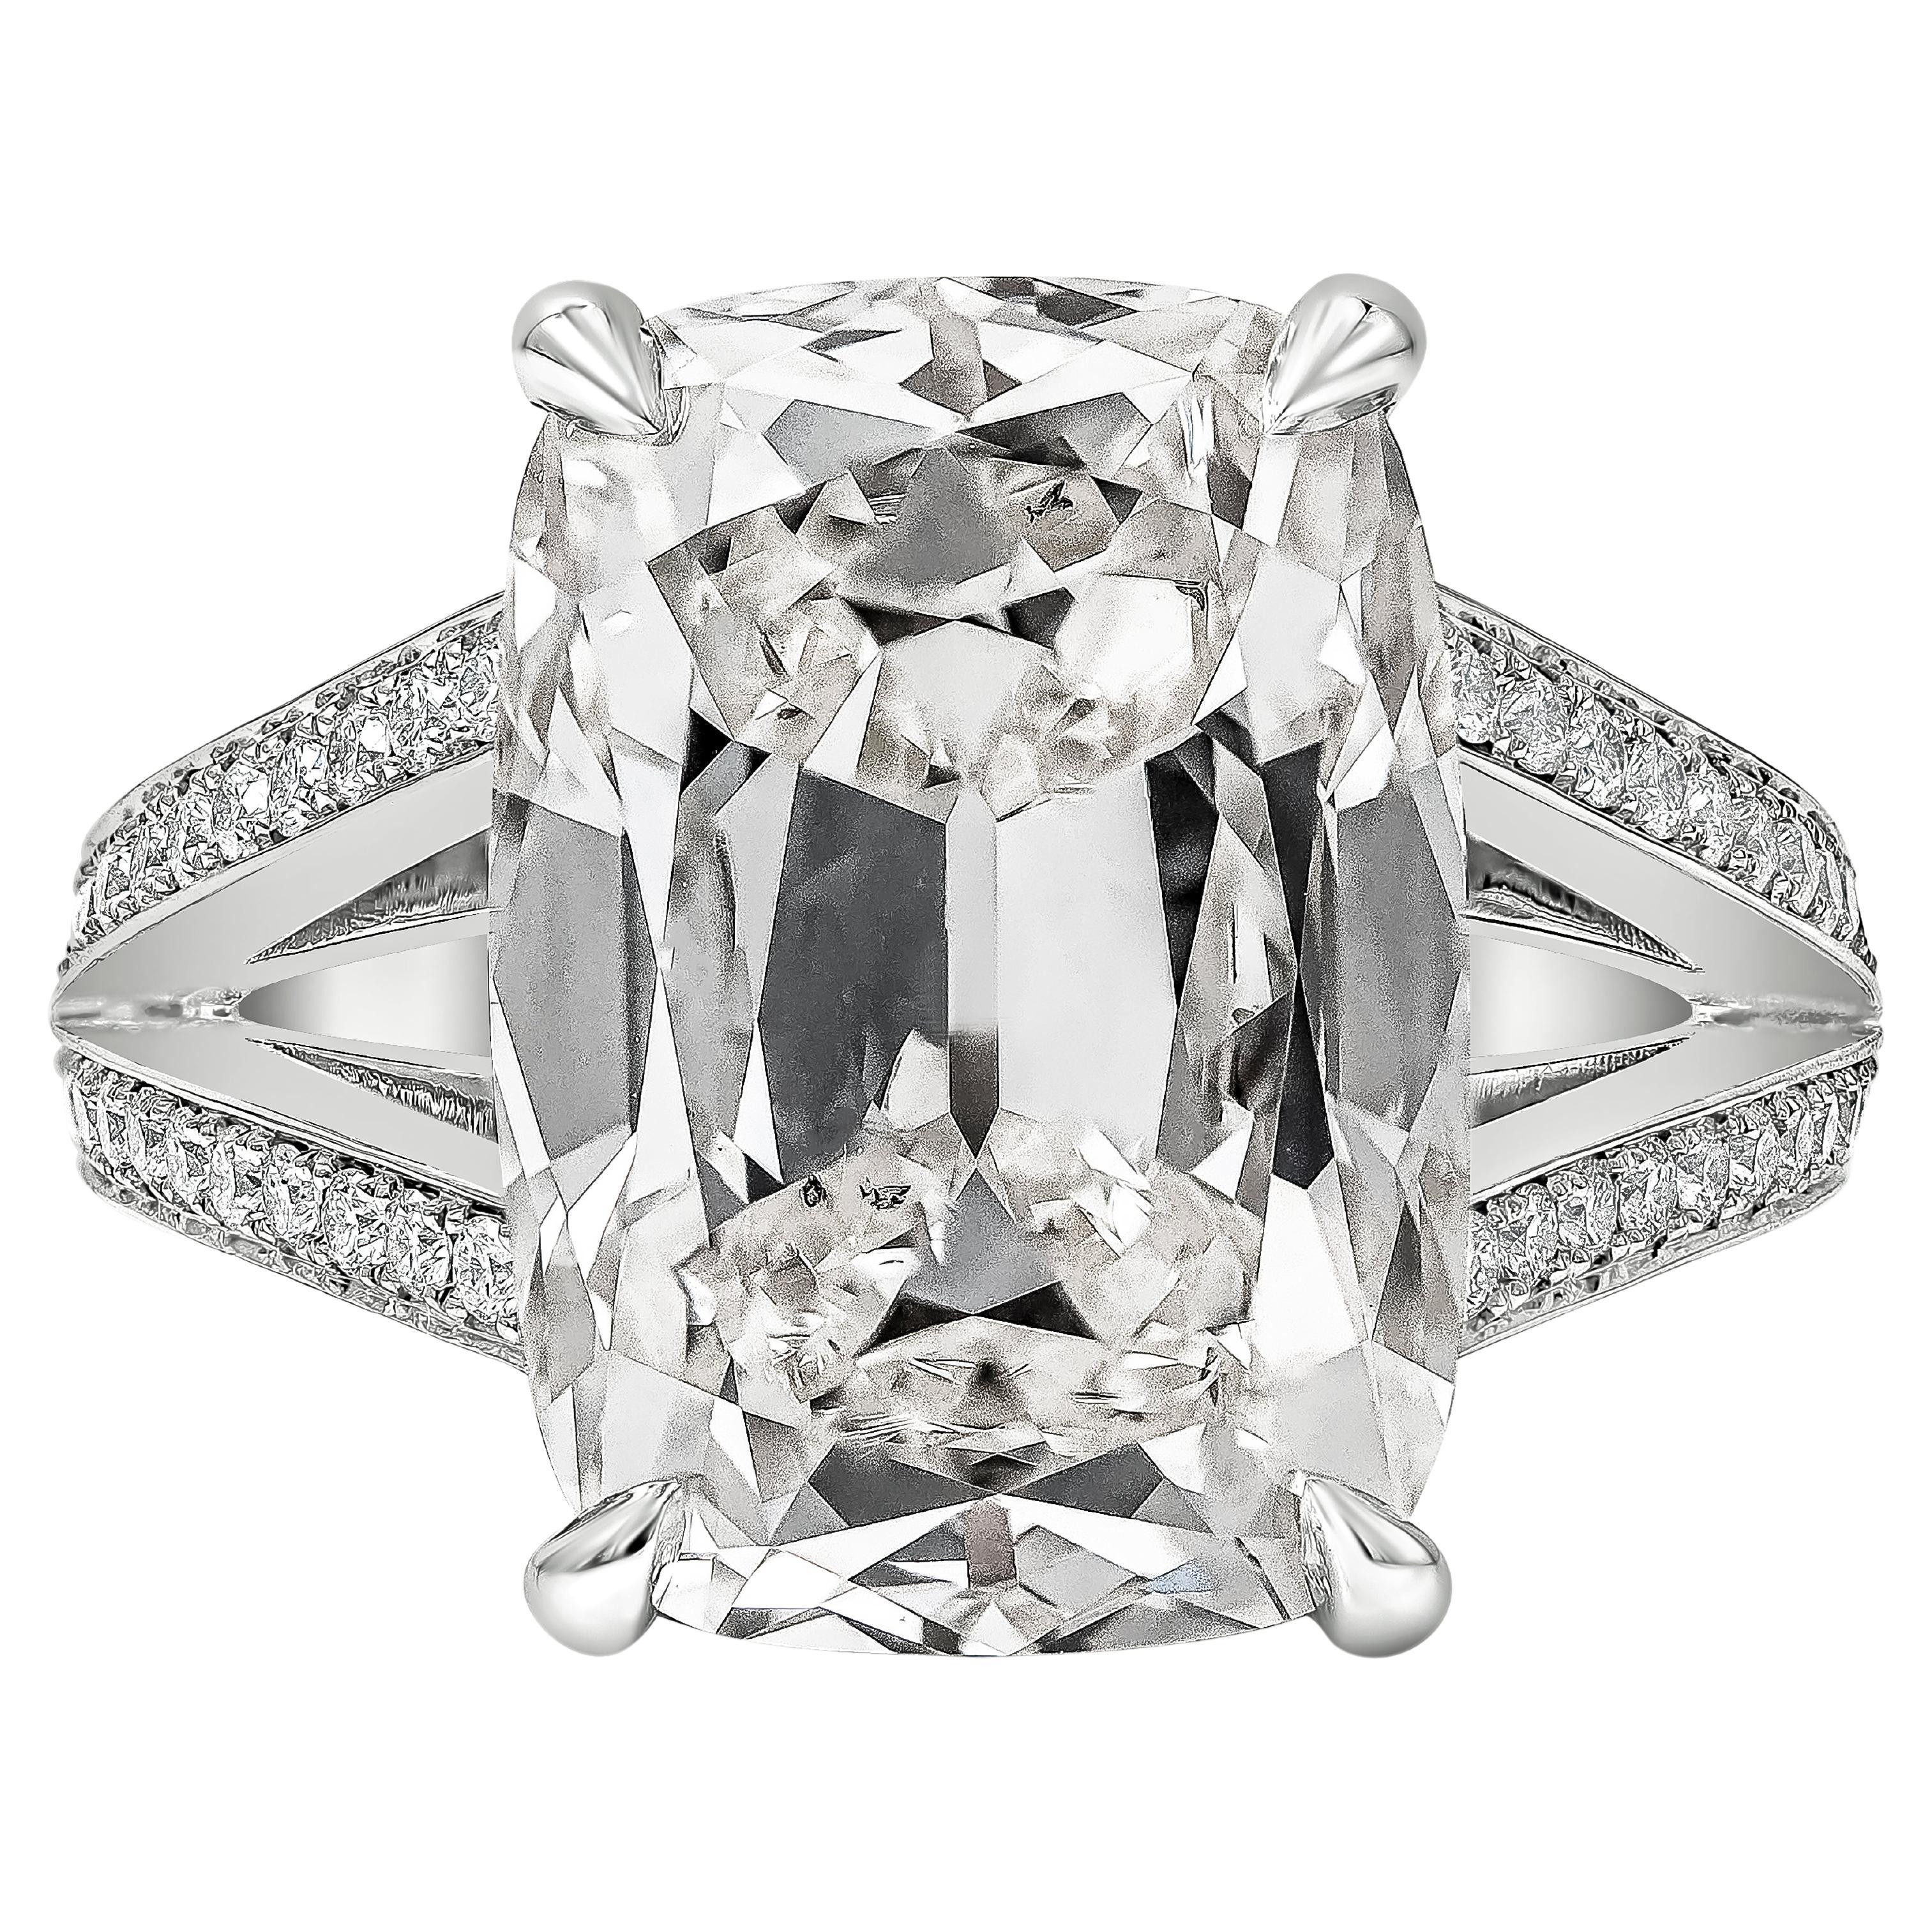 GIA Certified 10.09 Carats Elongated Cushion Cut Diamond Engagement Ring